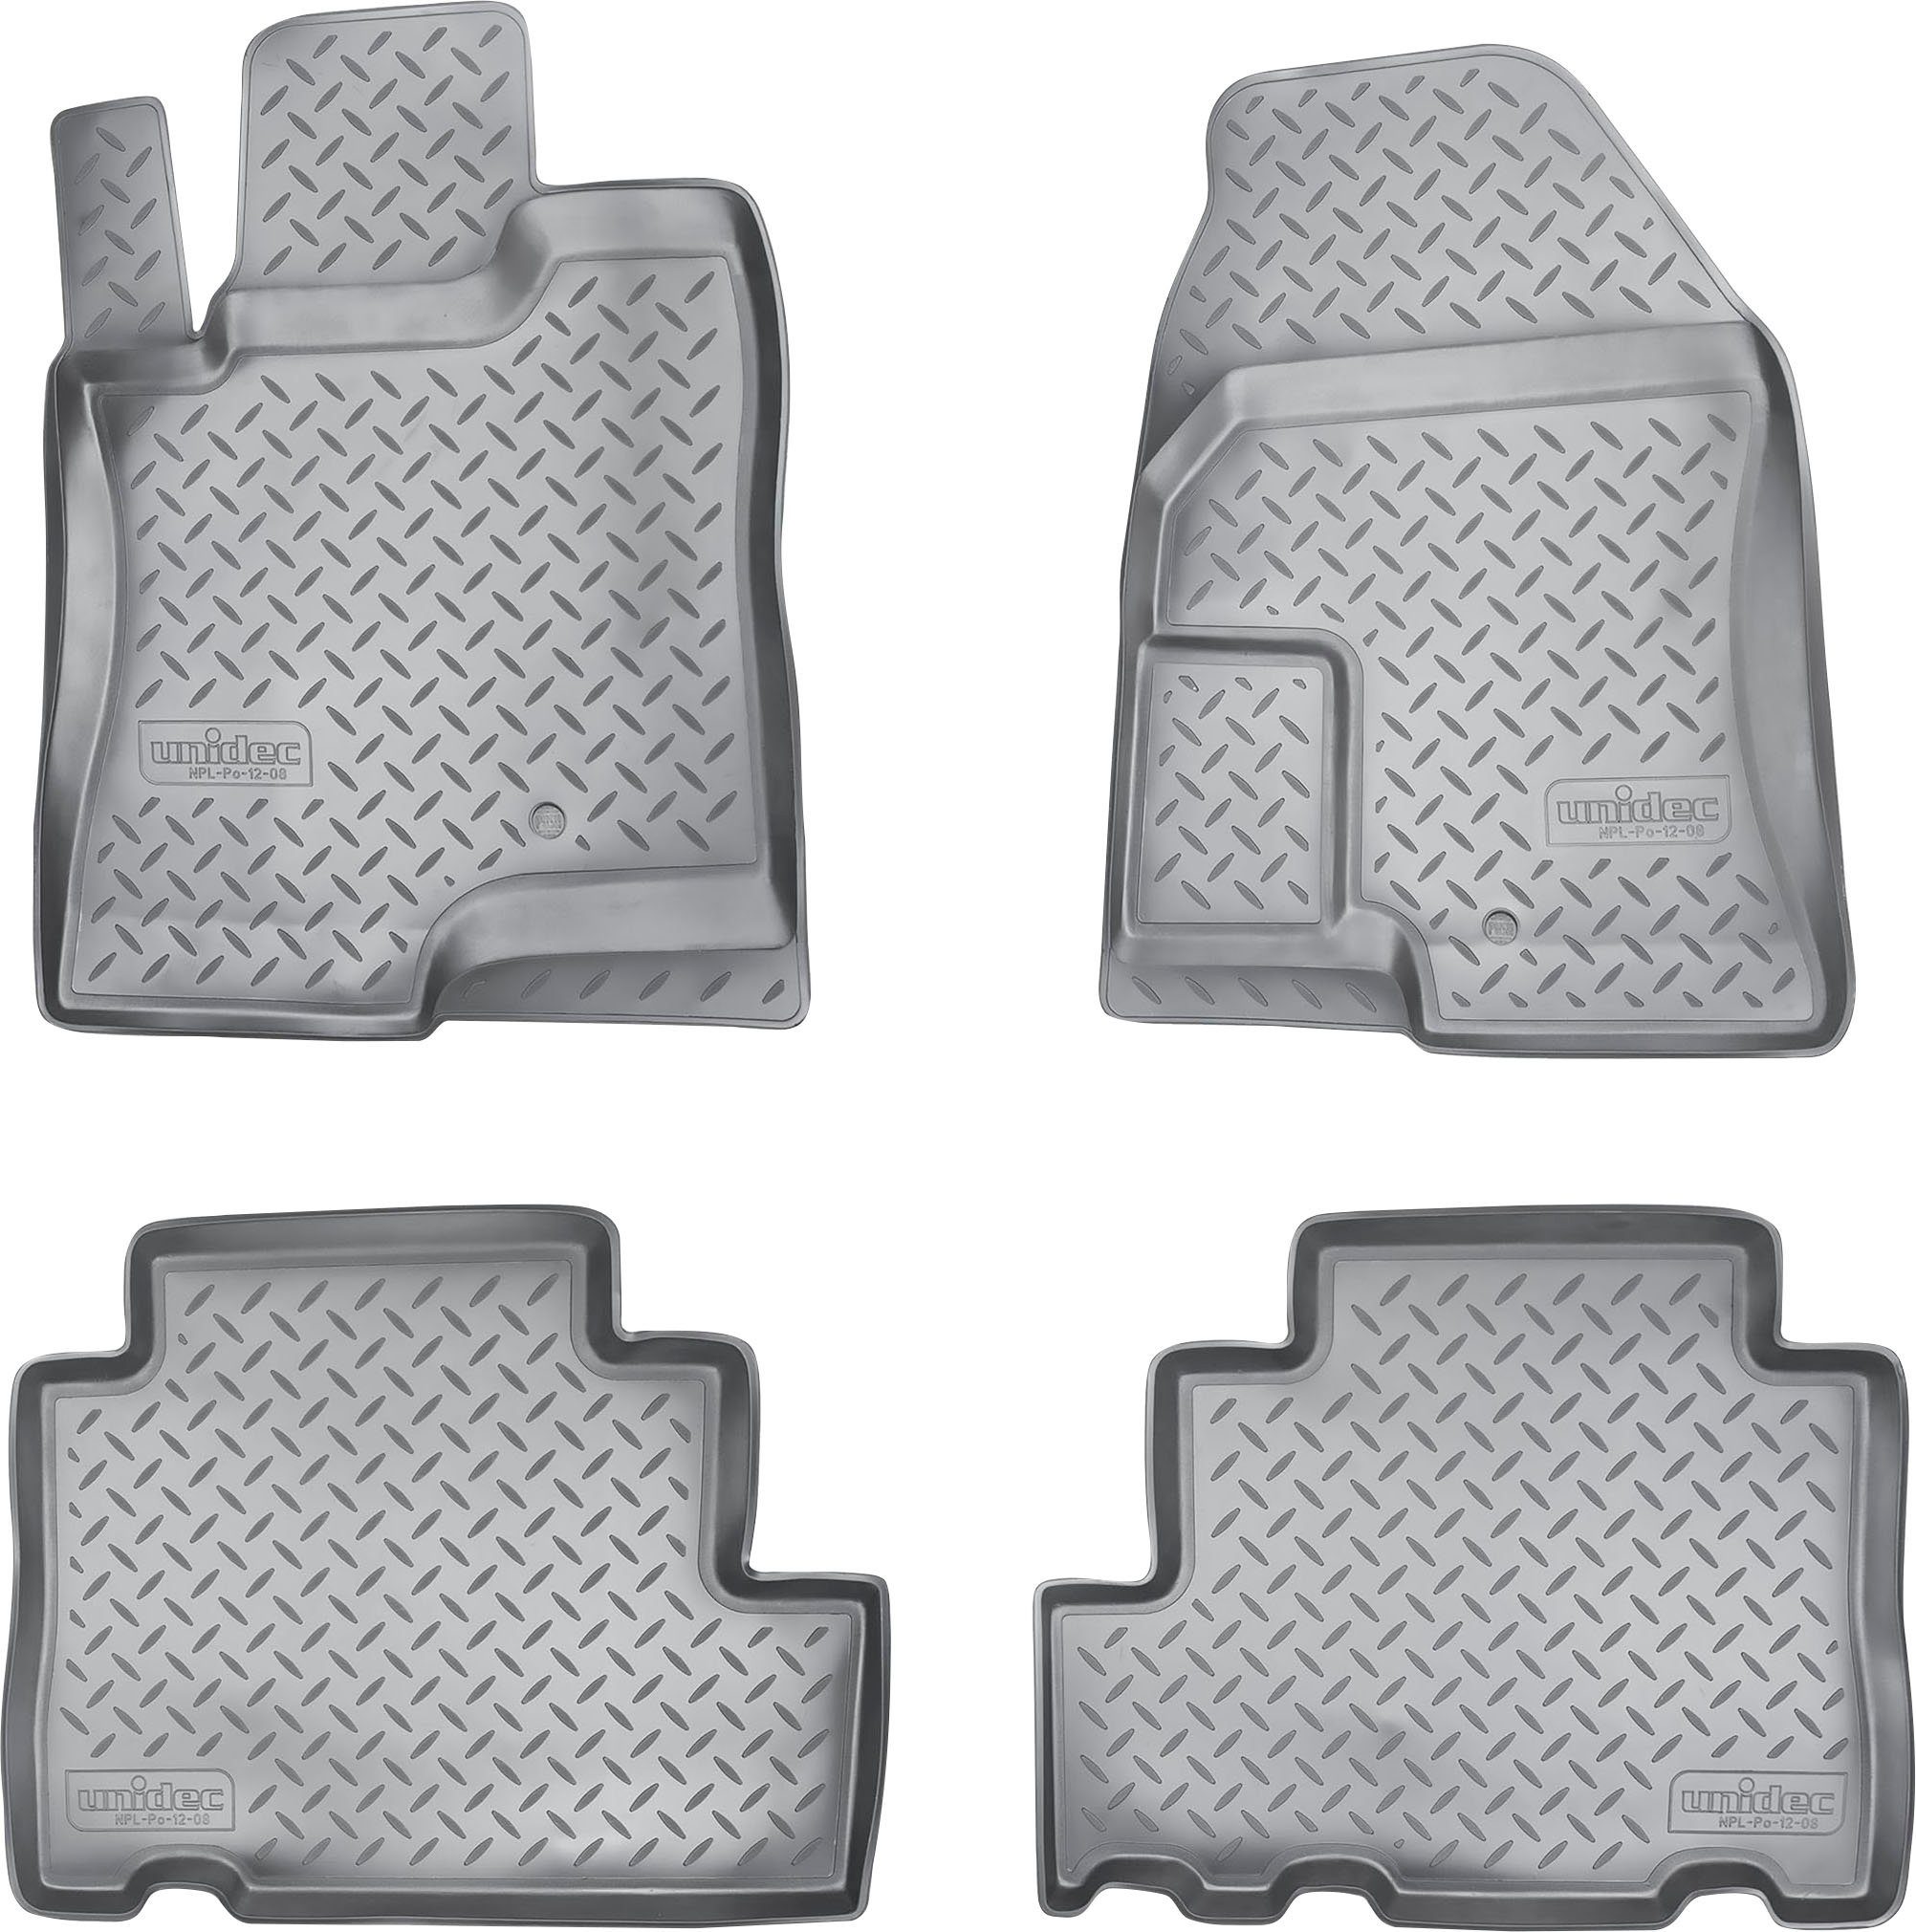 CustomComforts 2006, ab Captiva, Passform-Fußmatten Chevrolet St), perfekte (4 für RECAMBO OPEL Antara Passform